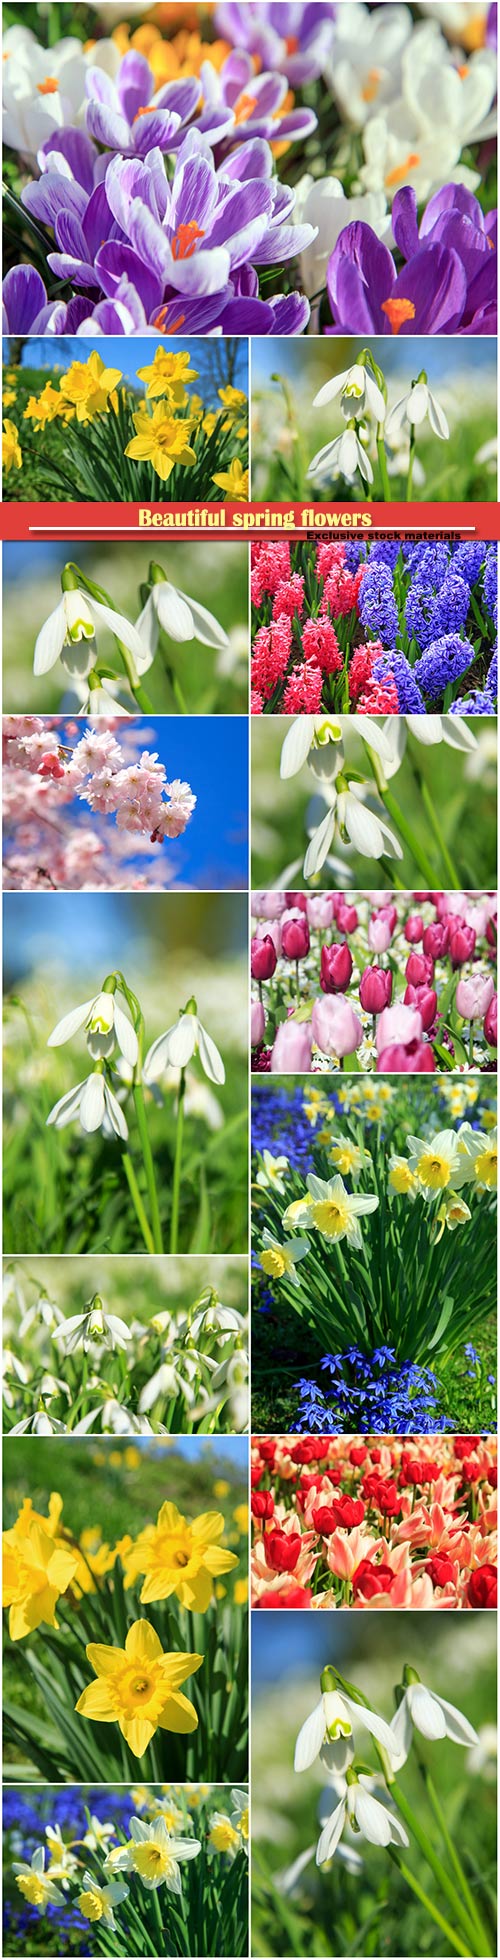 Beautiful spring flowers, snowdrops, daffodils, hyacinths, crocuses